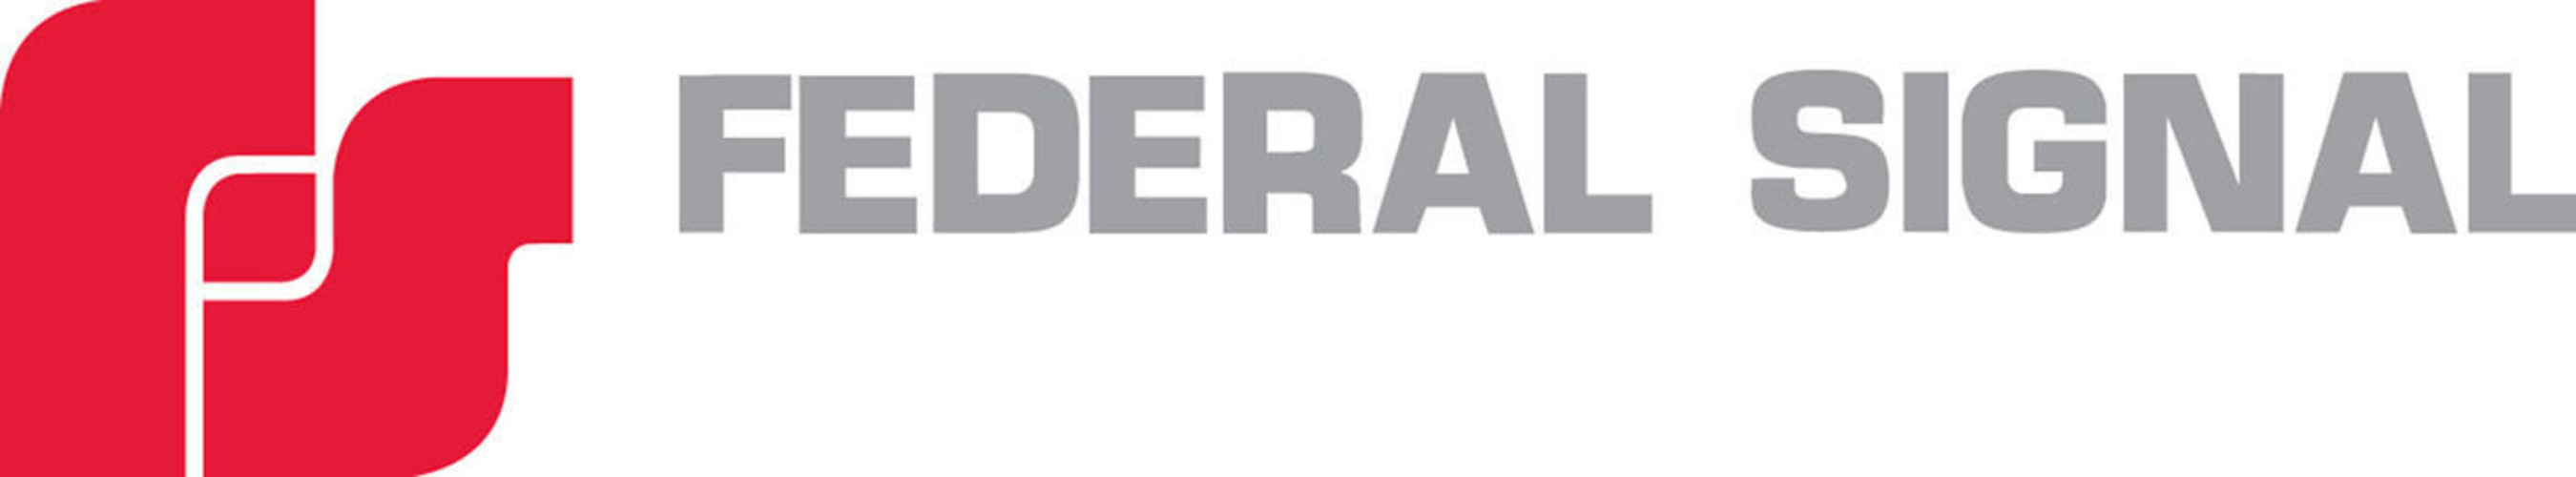 Federal Signal Corporation Logo.